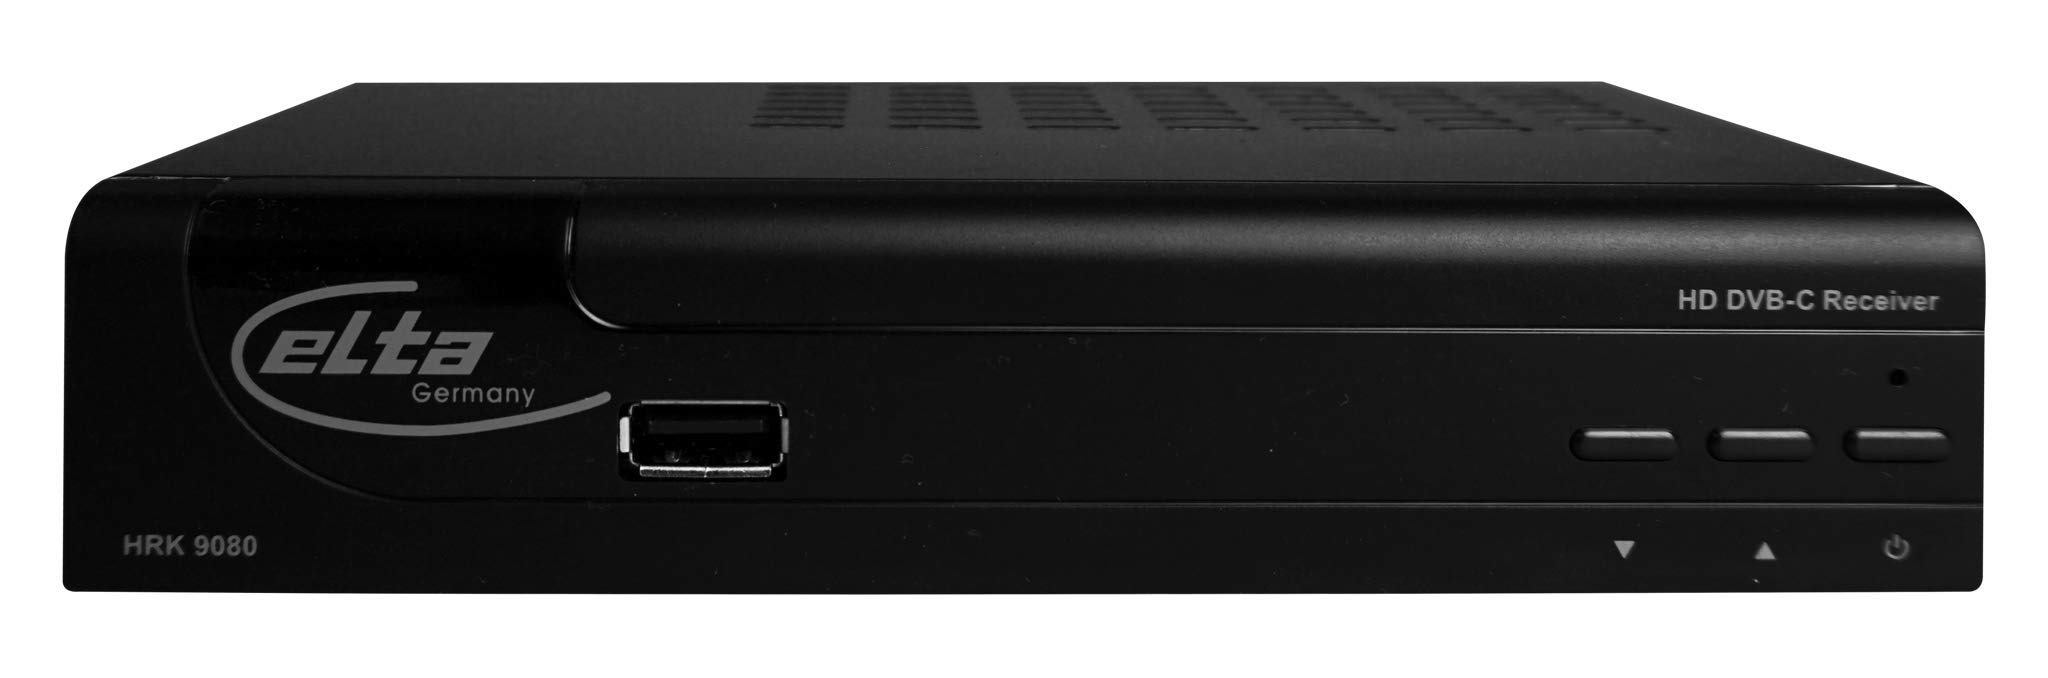 Elta Full HD digitaler Kabelreceiver HRK9080 (DVB-C, HDMI, Full HD 1080p, SCART, USB 2.0, LAN, Fernbedienung) 5011201 schwarz